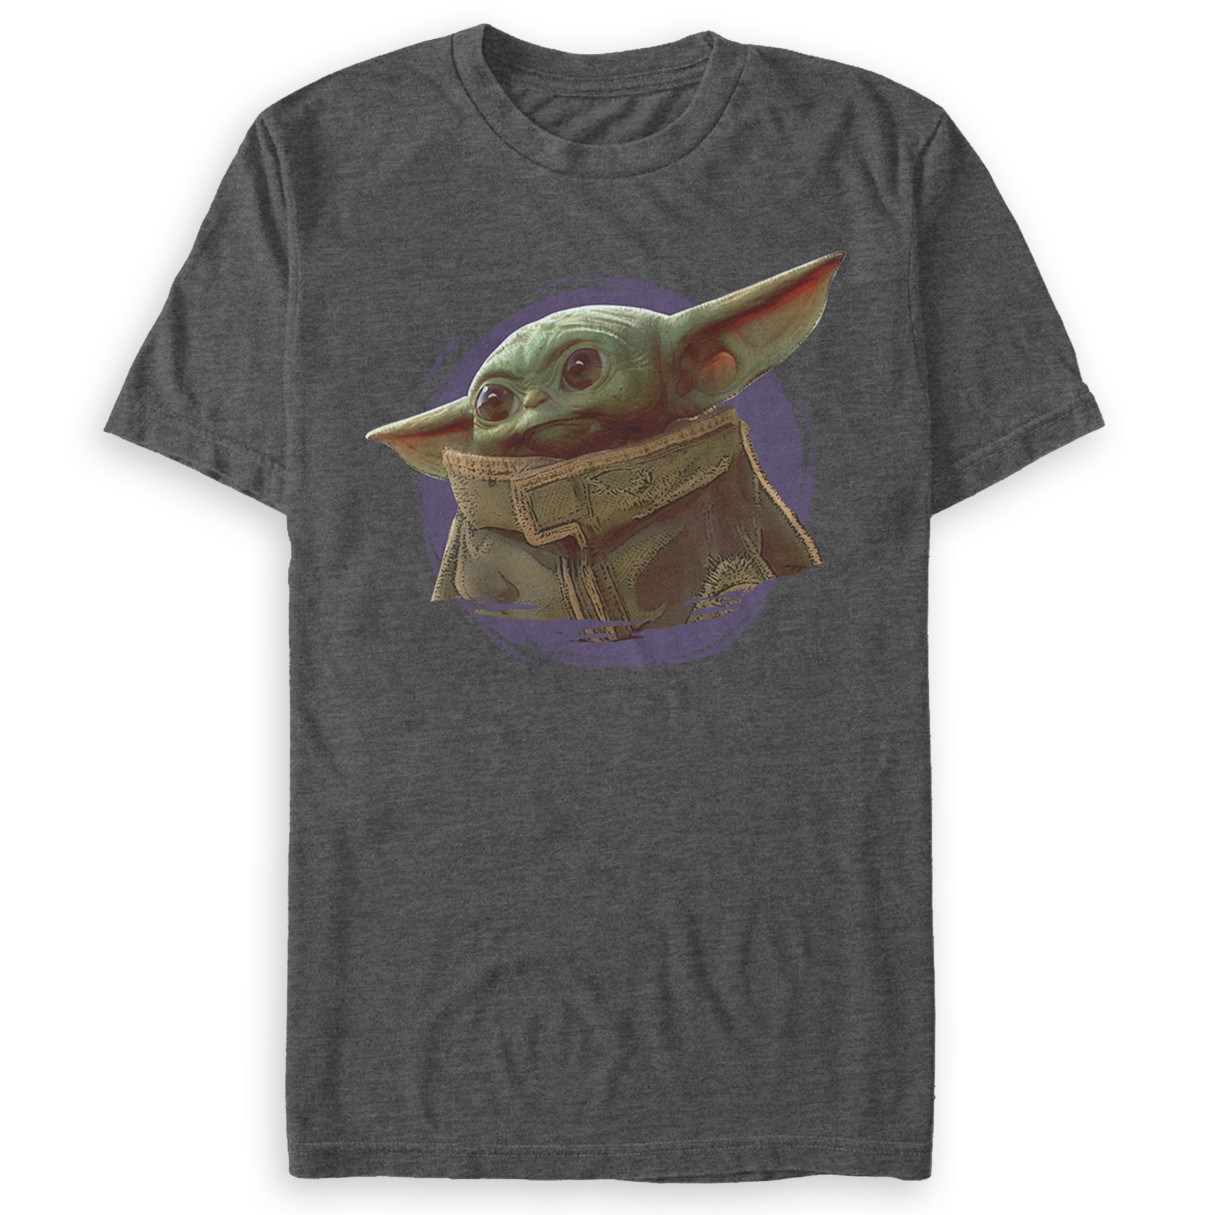 Grogu T-Shirt for Adults – Star Wars: The Mandalorian